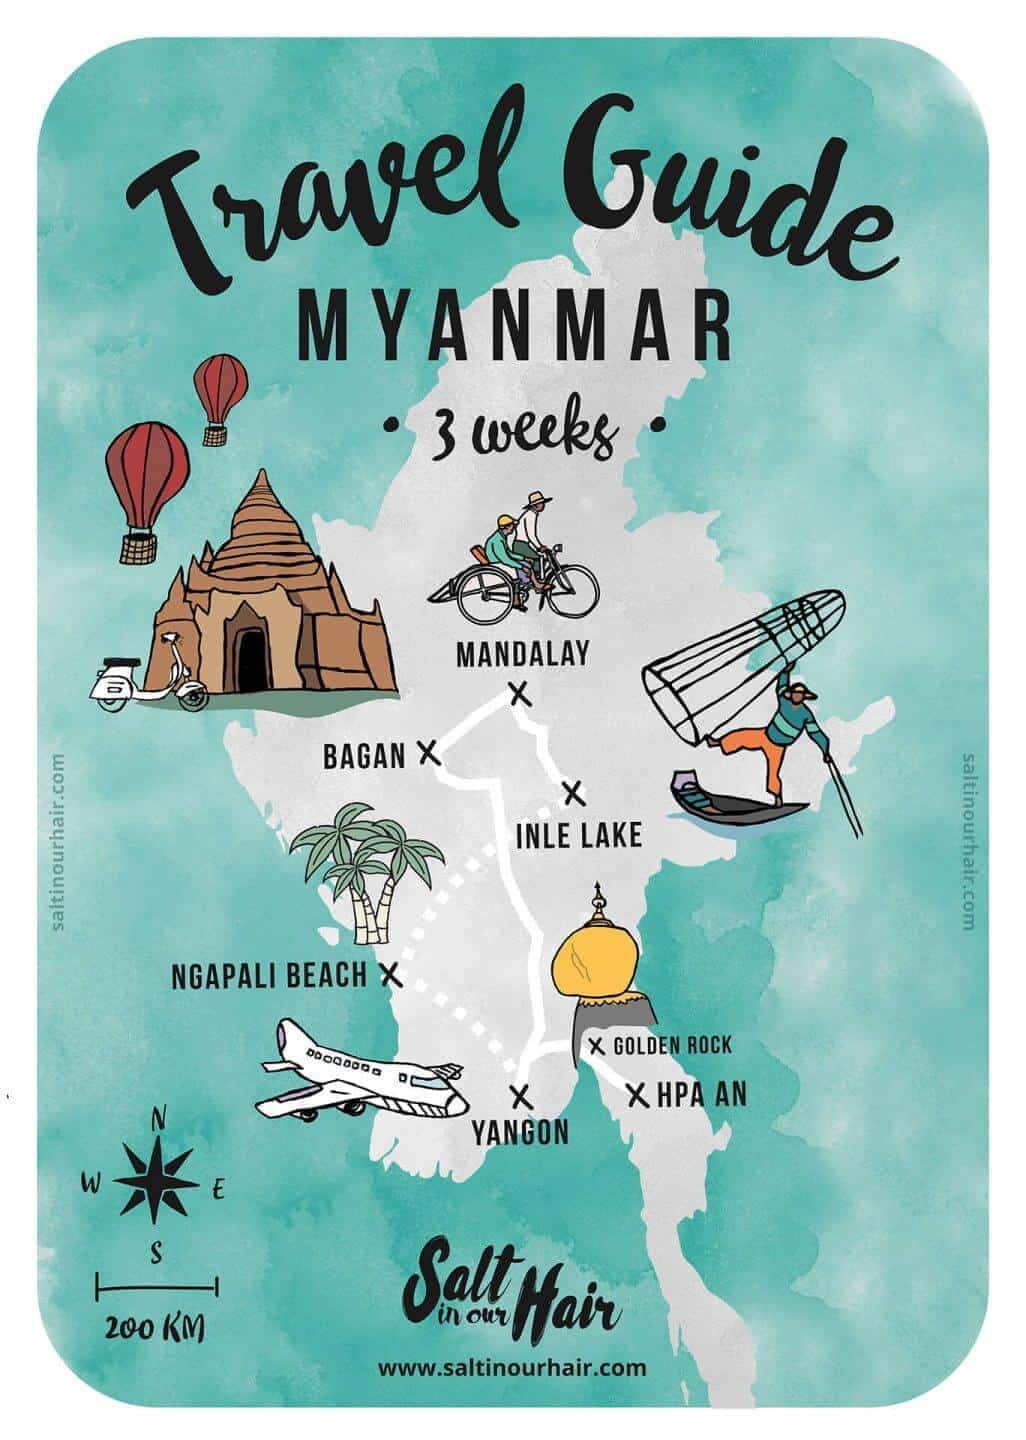 myanmar tour guide